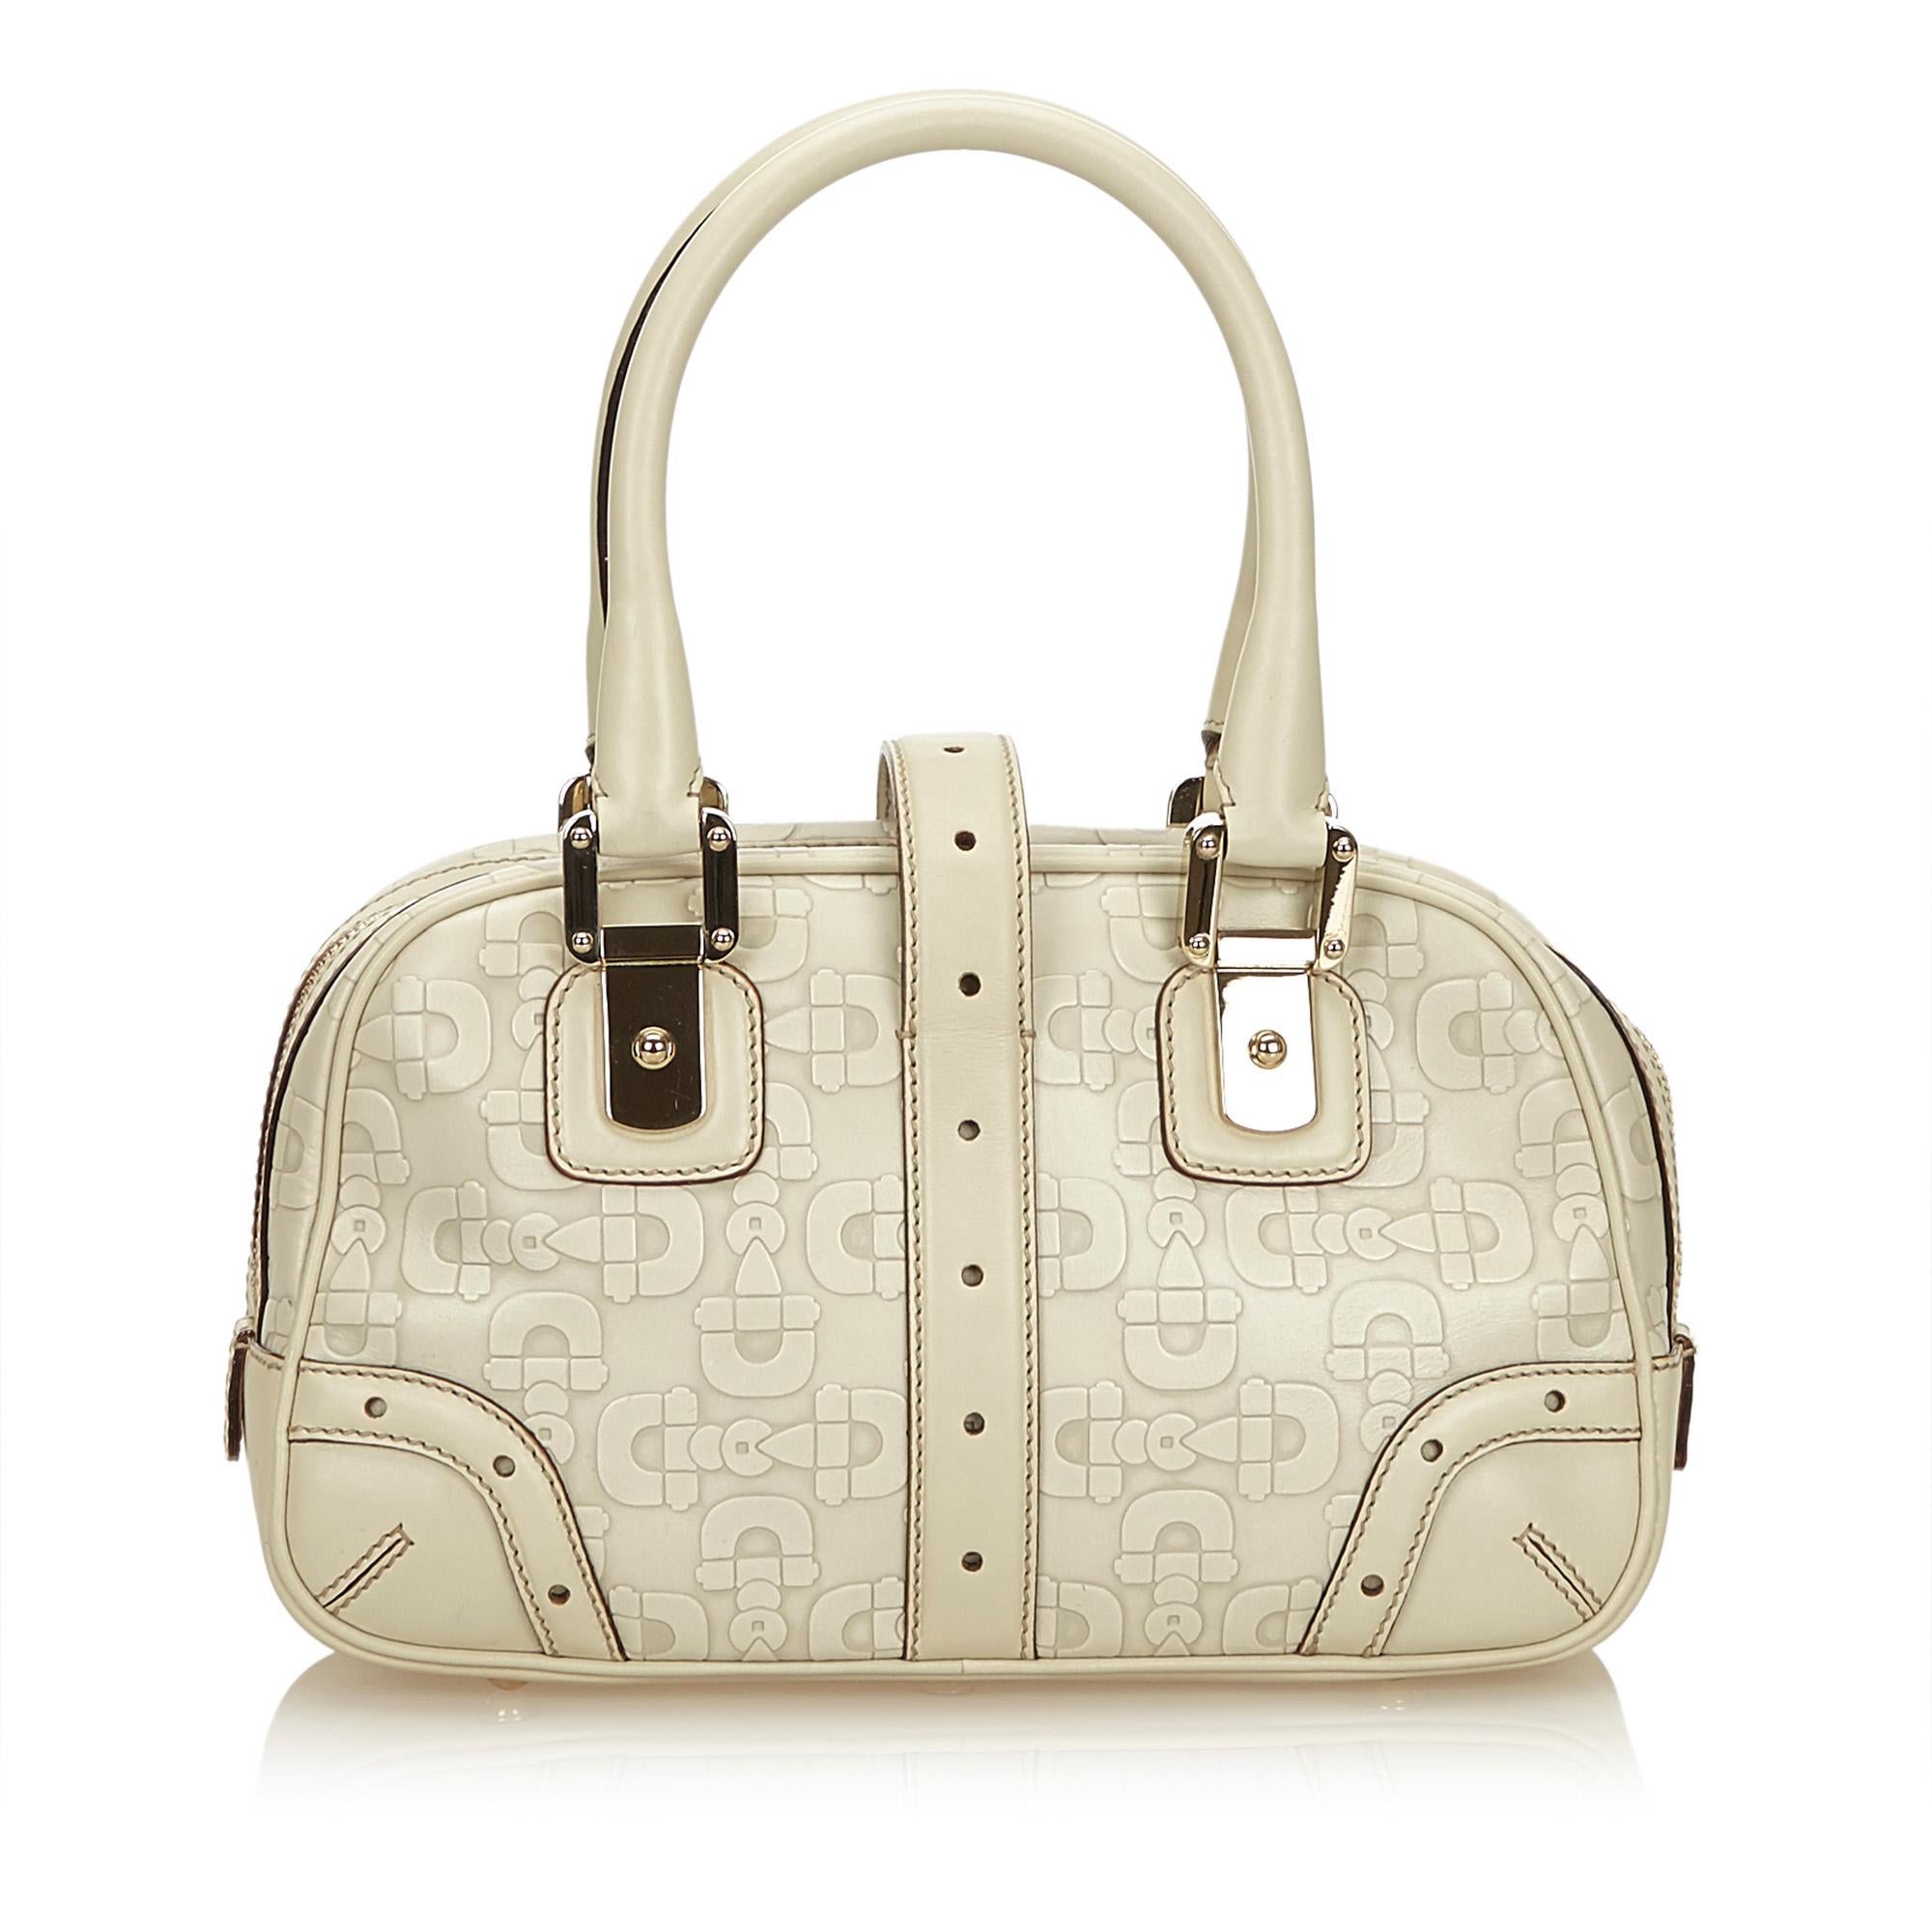 Gucci White Leather Horsebit Handbag In Good Condition For Sale In Orlando, FL